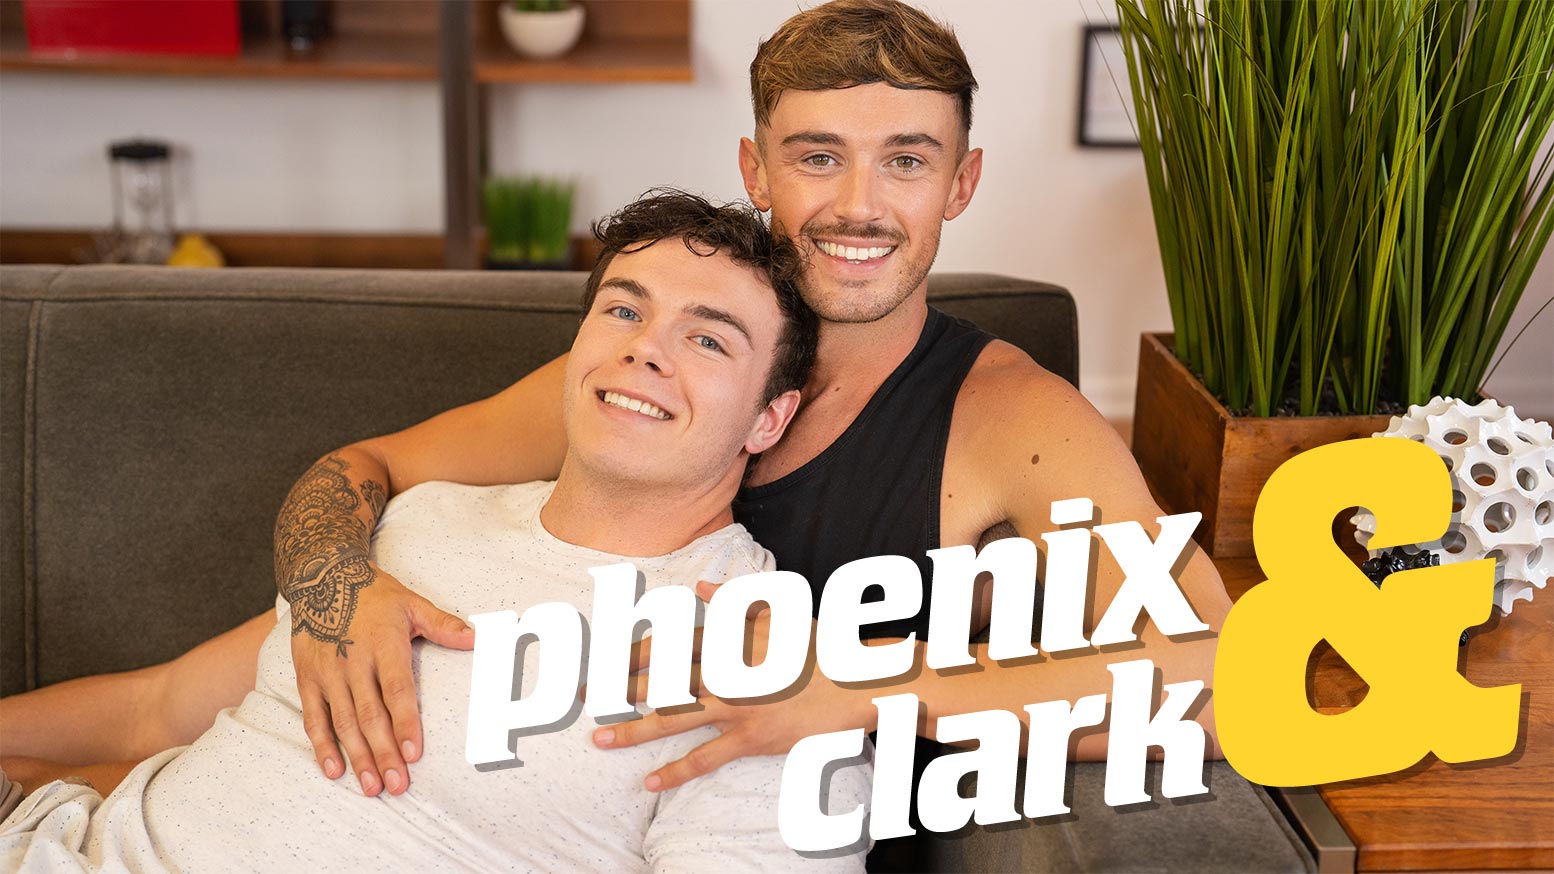 Phoenix & Clark